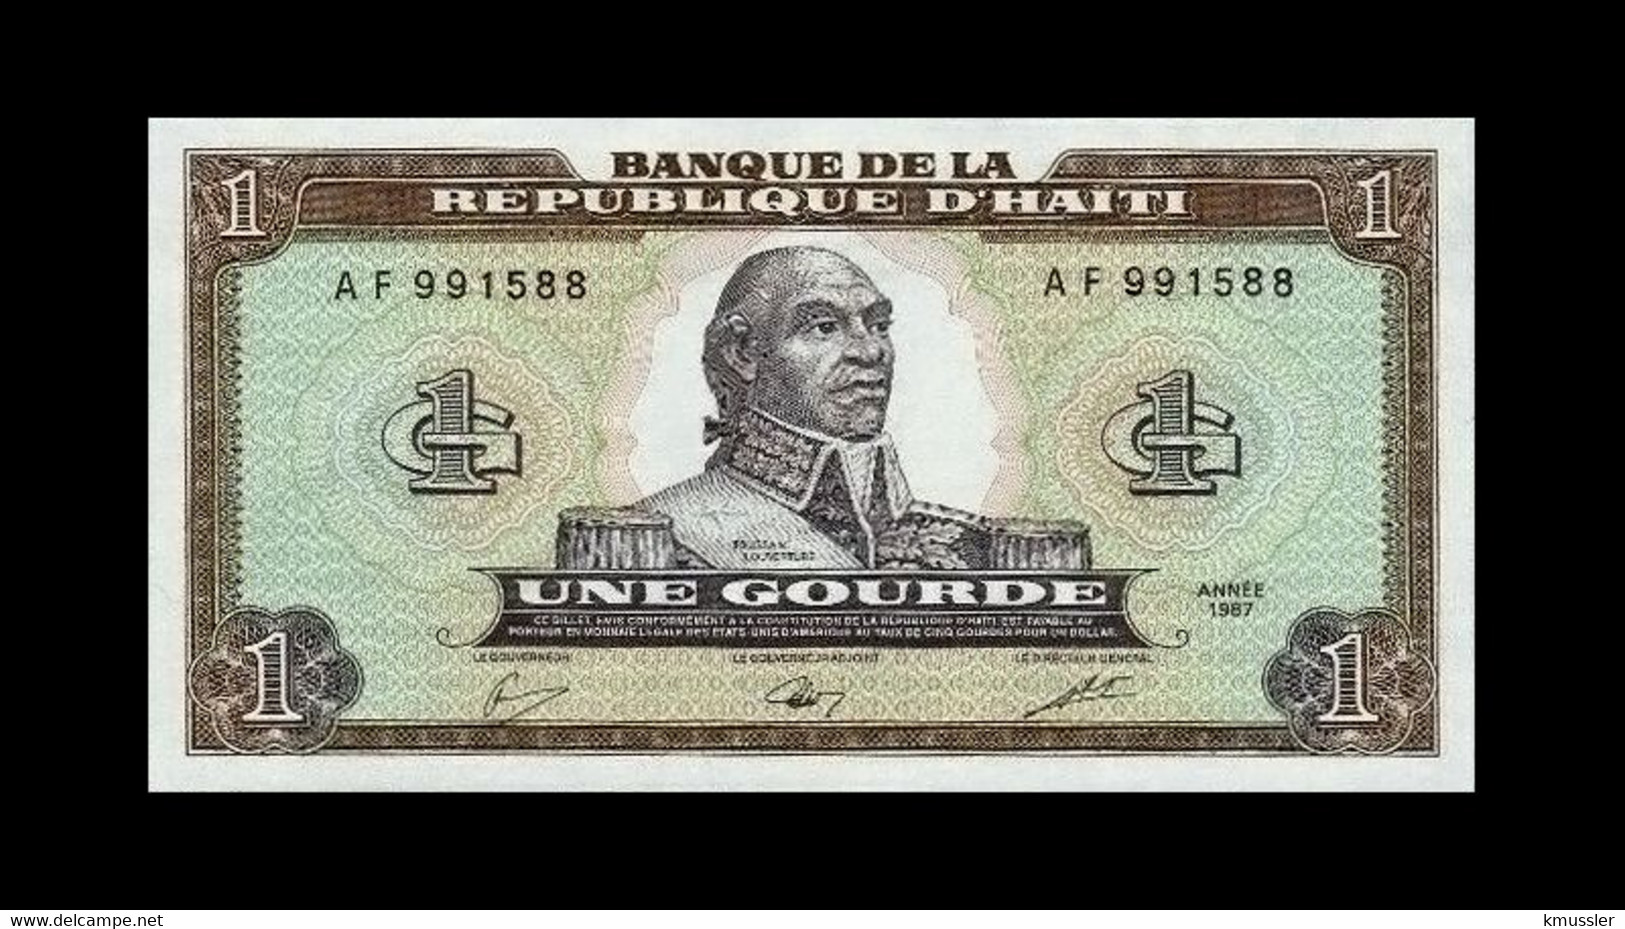 # # # Banknote Aus Haiti 1 Gourde UNC # # # - Haiti